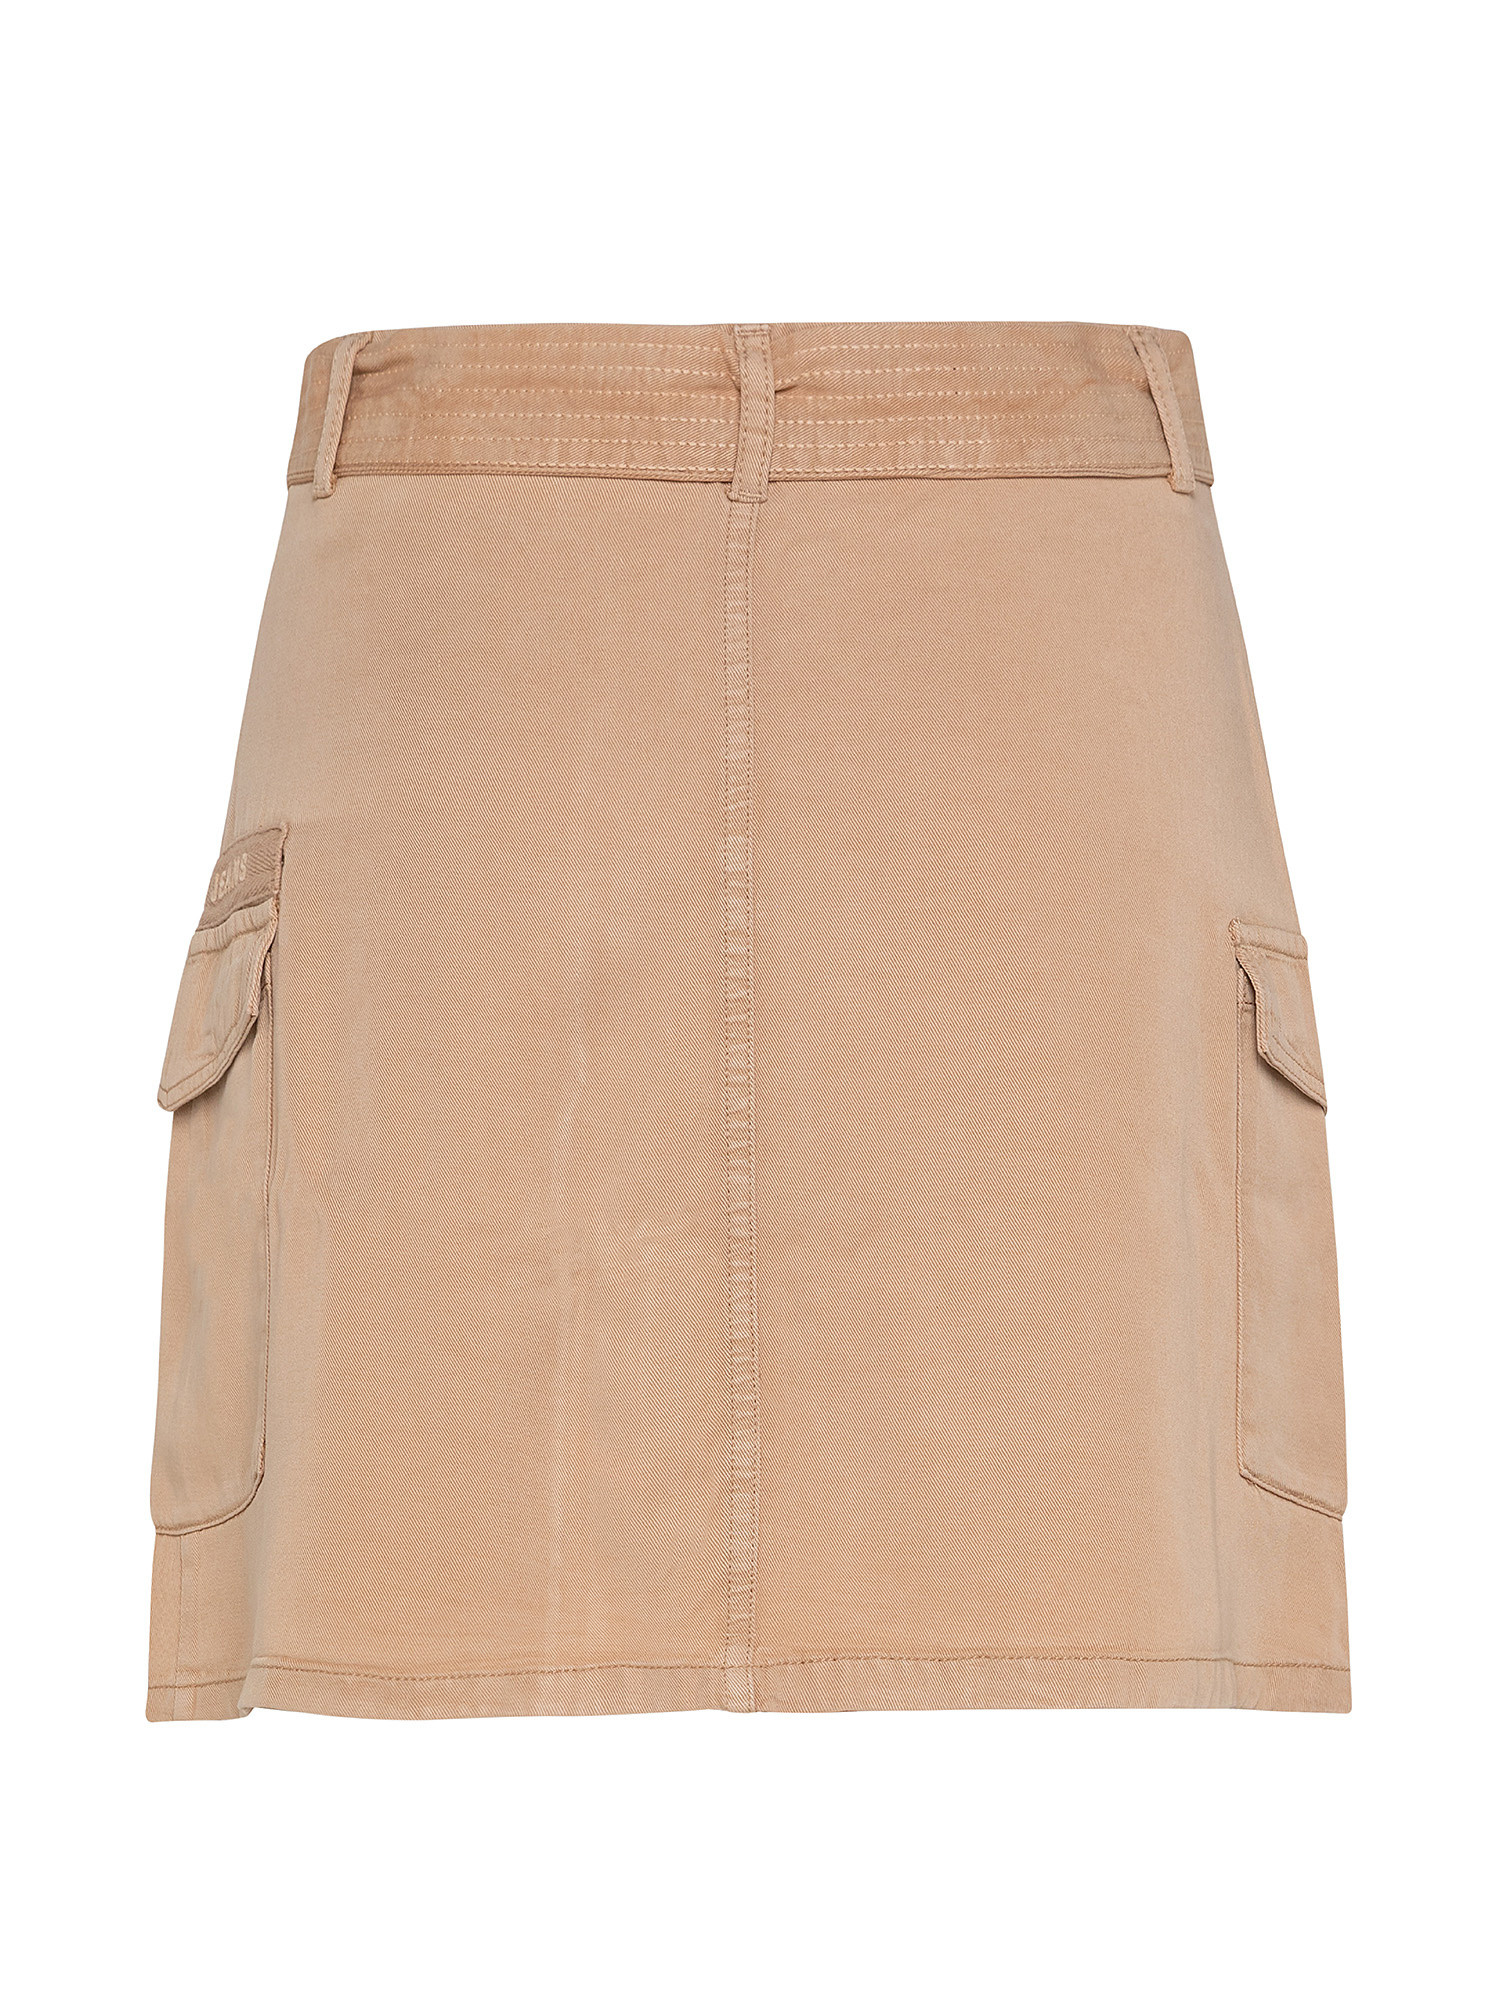 Floren skirt with zip, Beige, large image number 1